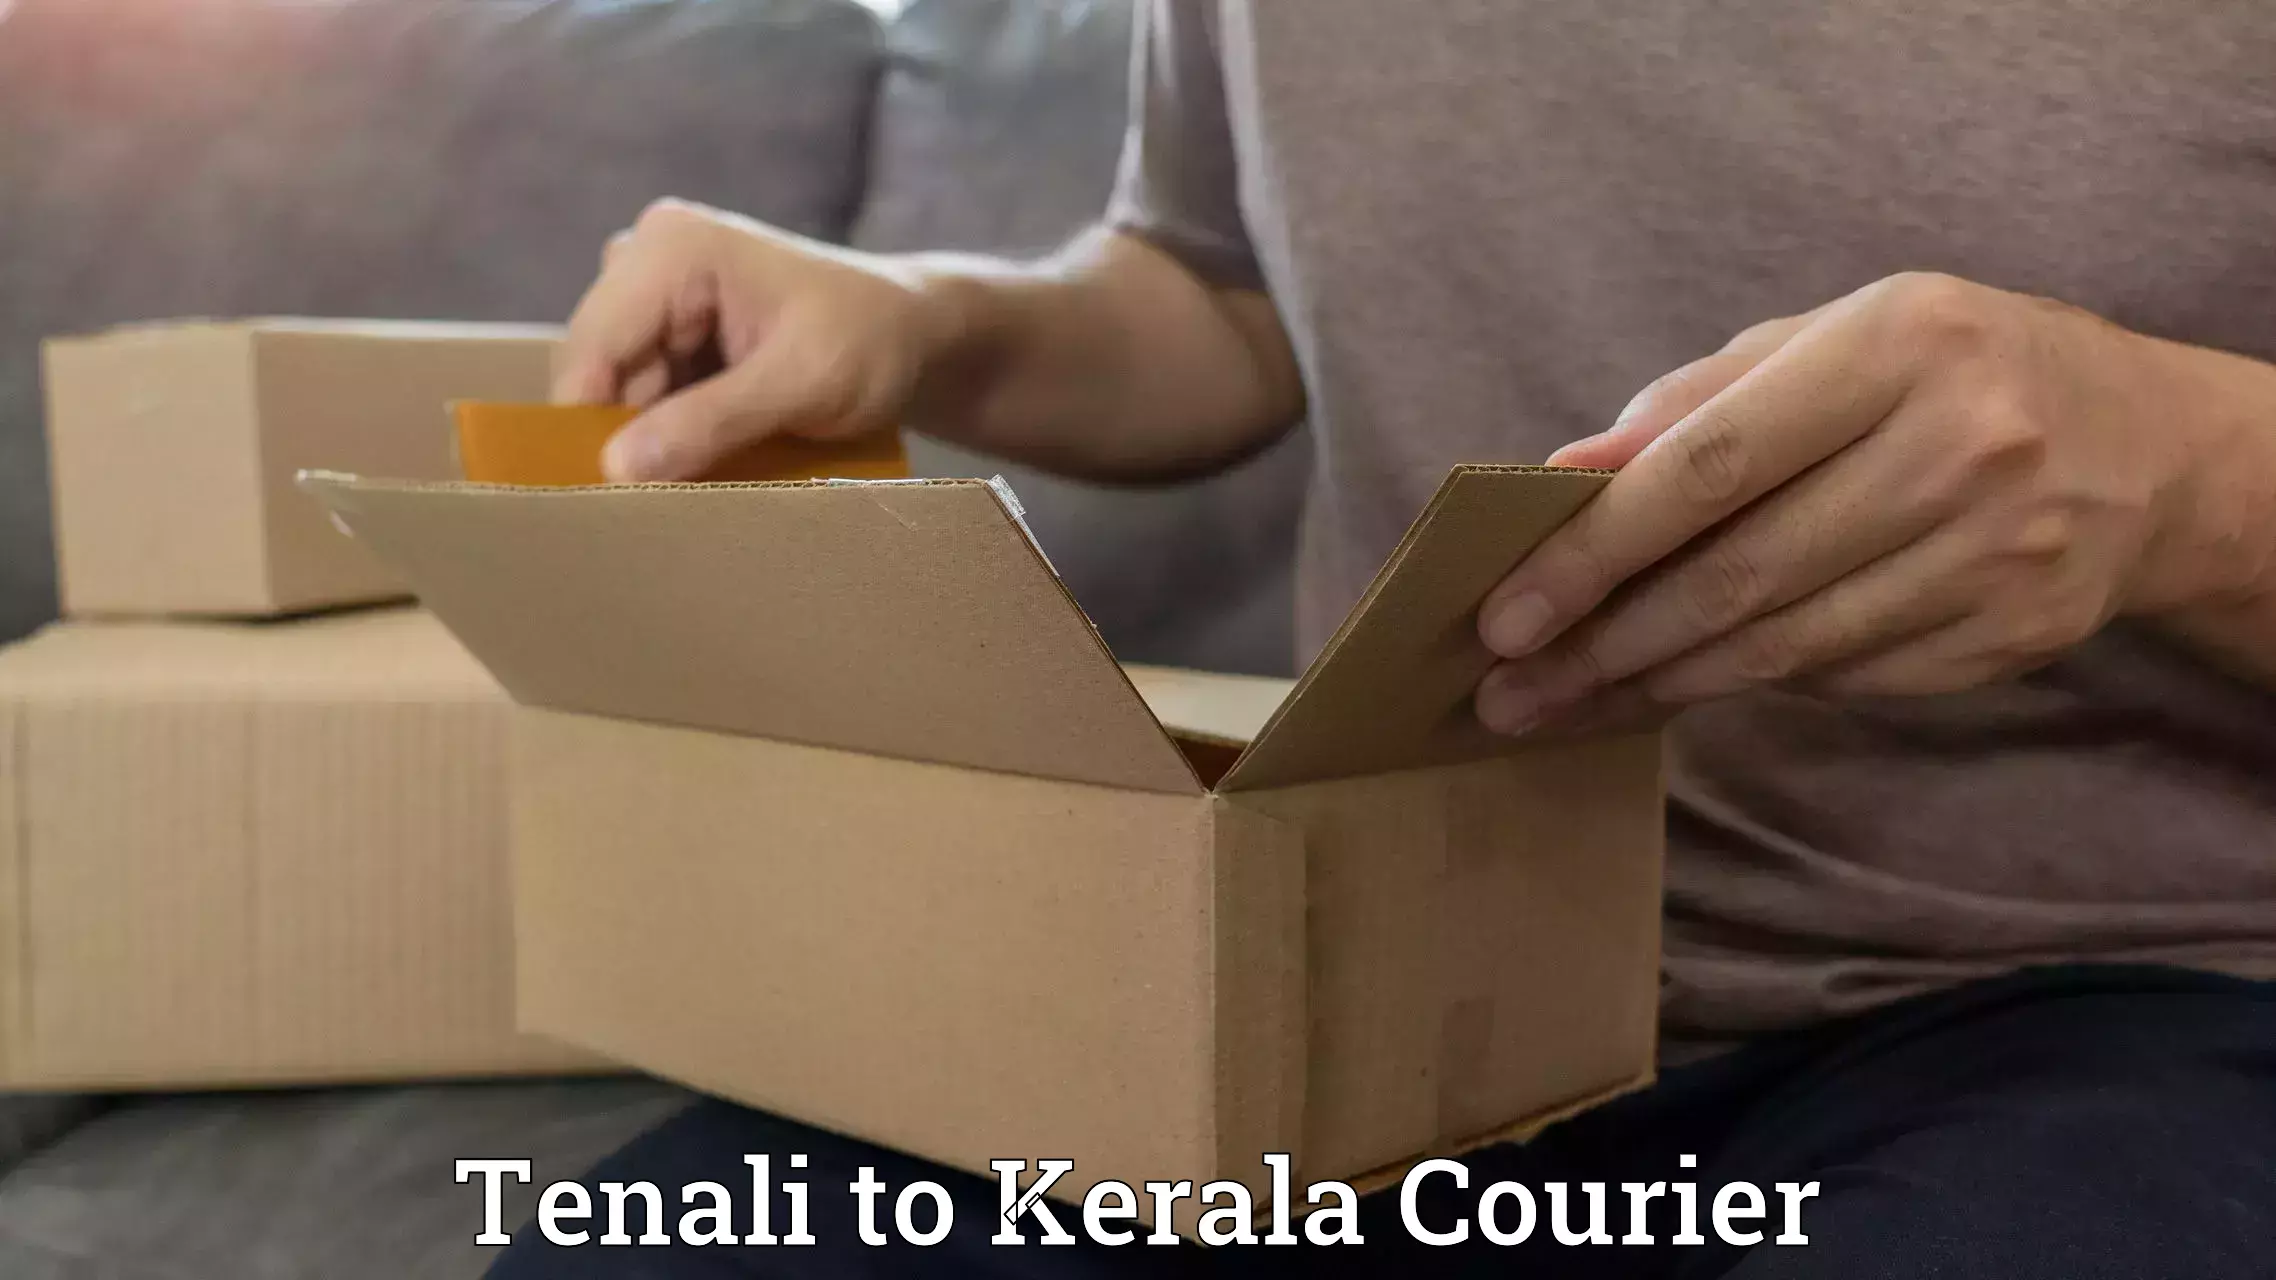 Professional courier handling Tenali to Kerala